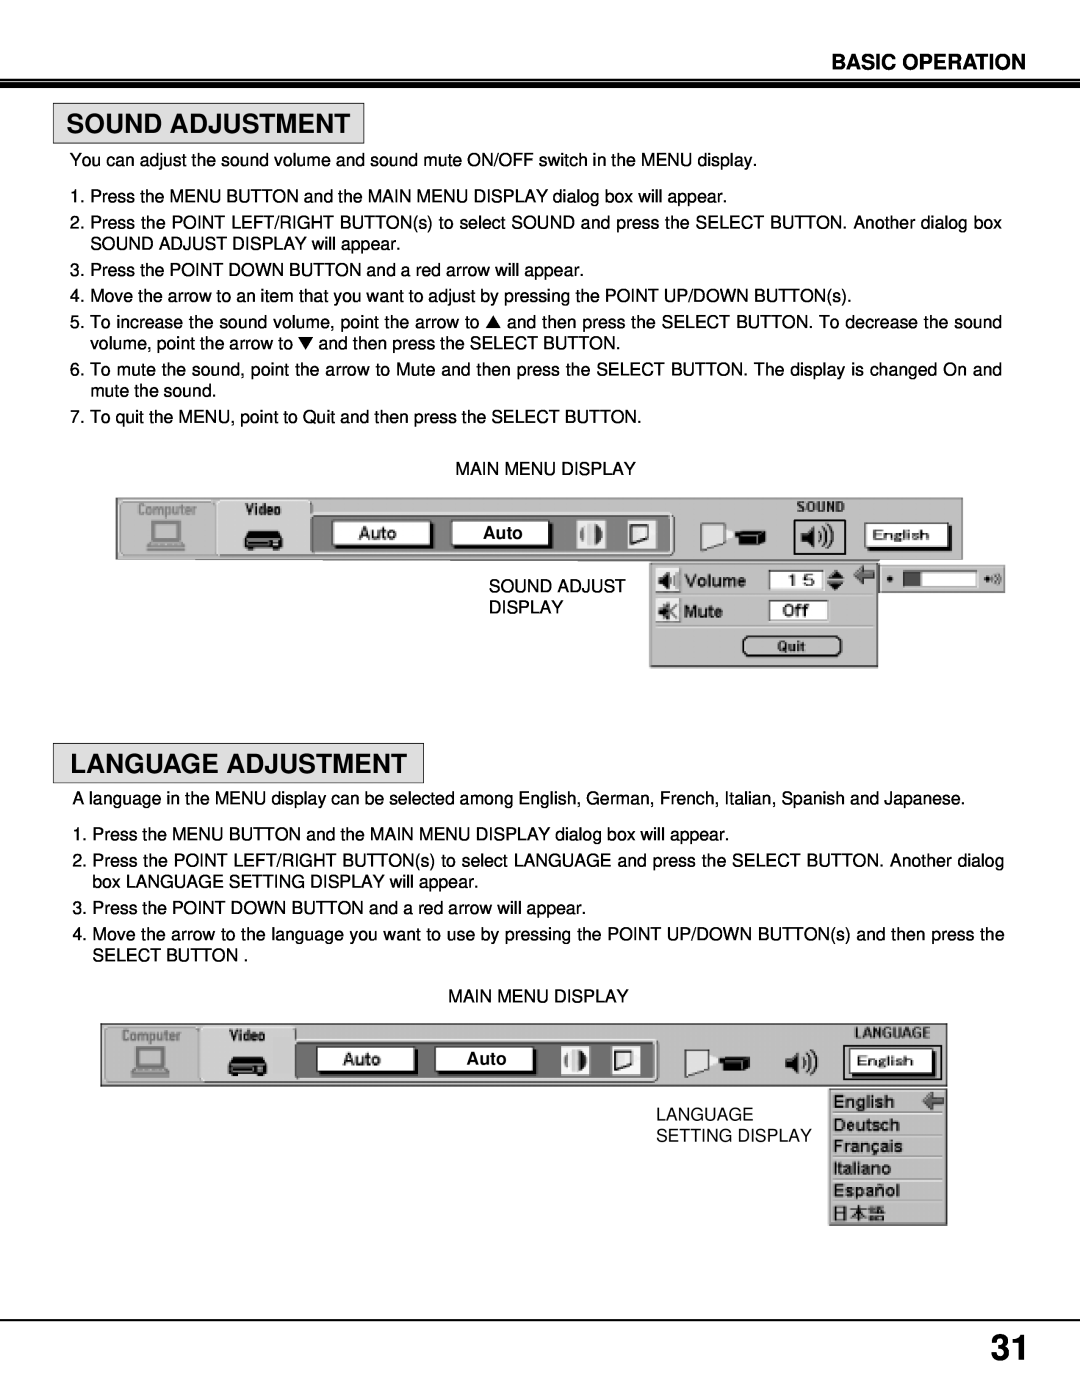 BOXLIGHT MP-37t manual Sound Adjustment, Language Adjustment, Basic Operation 